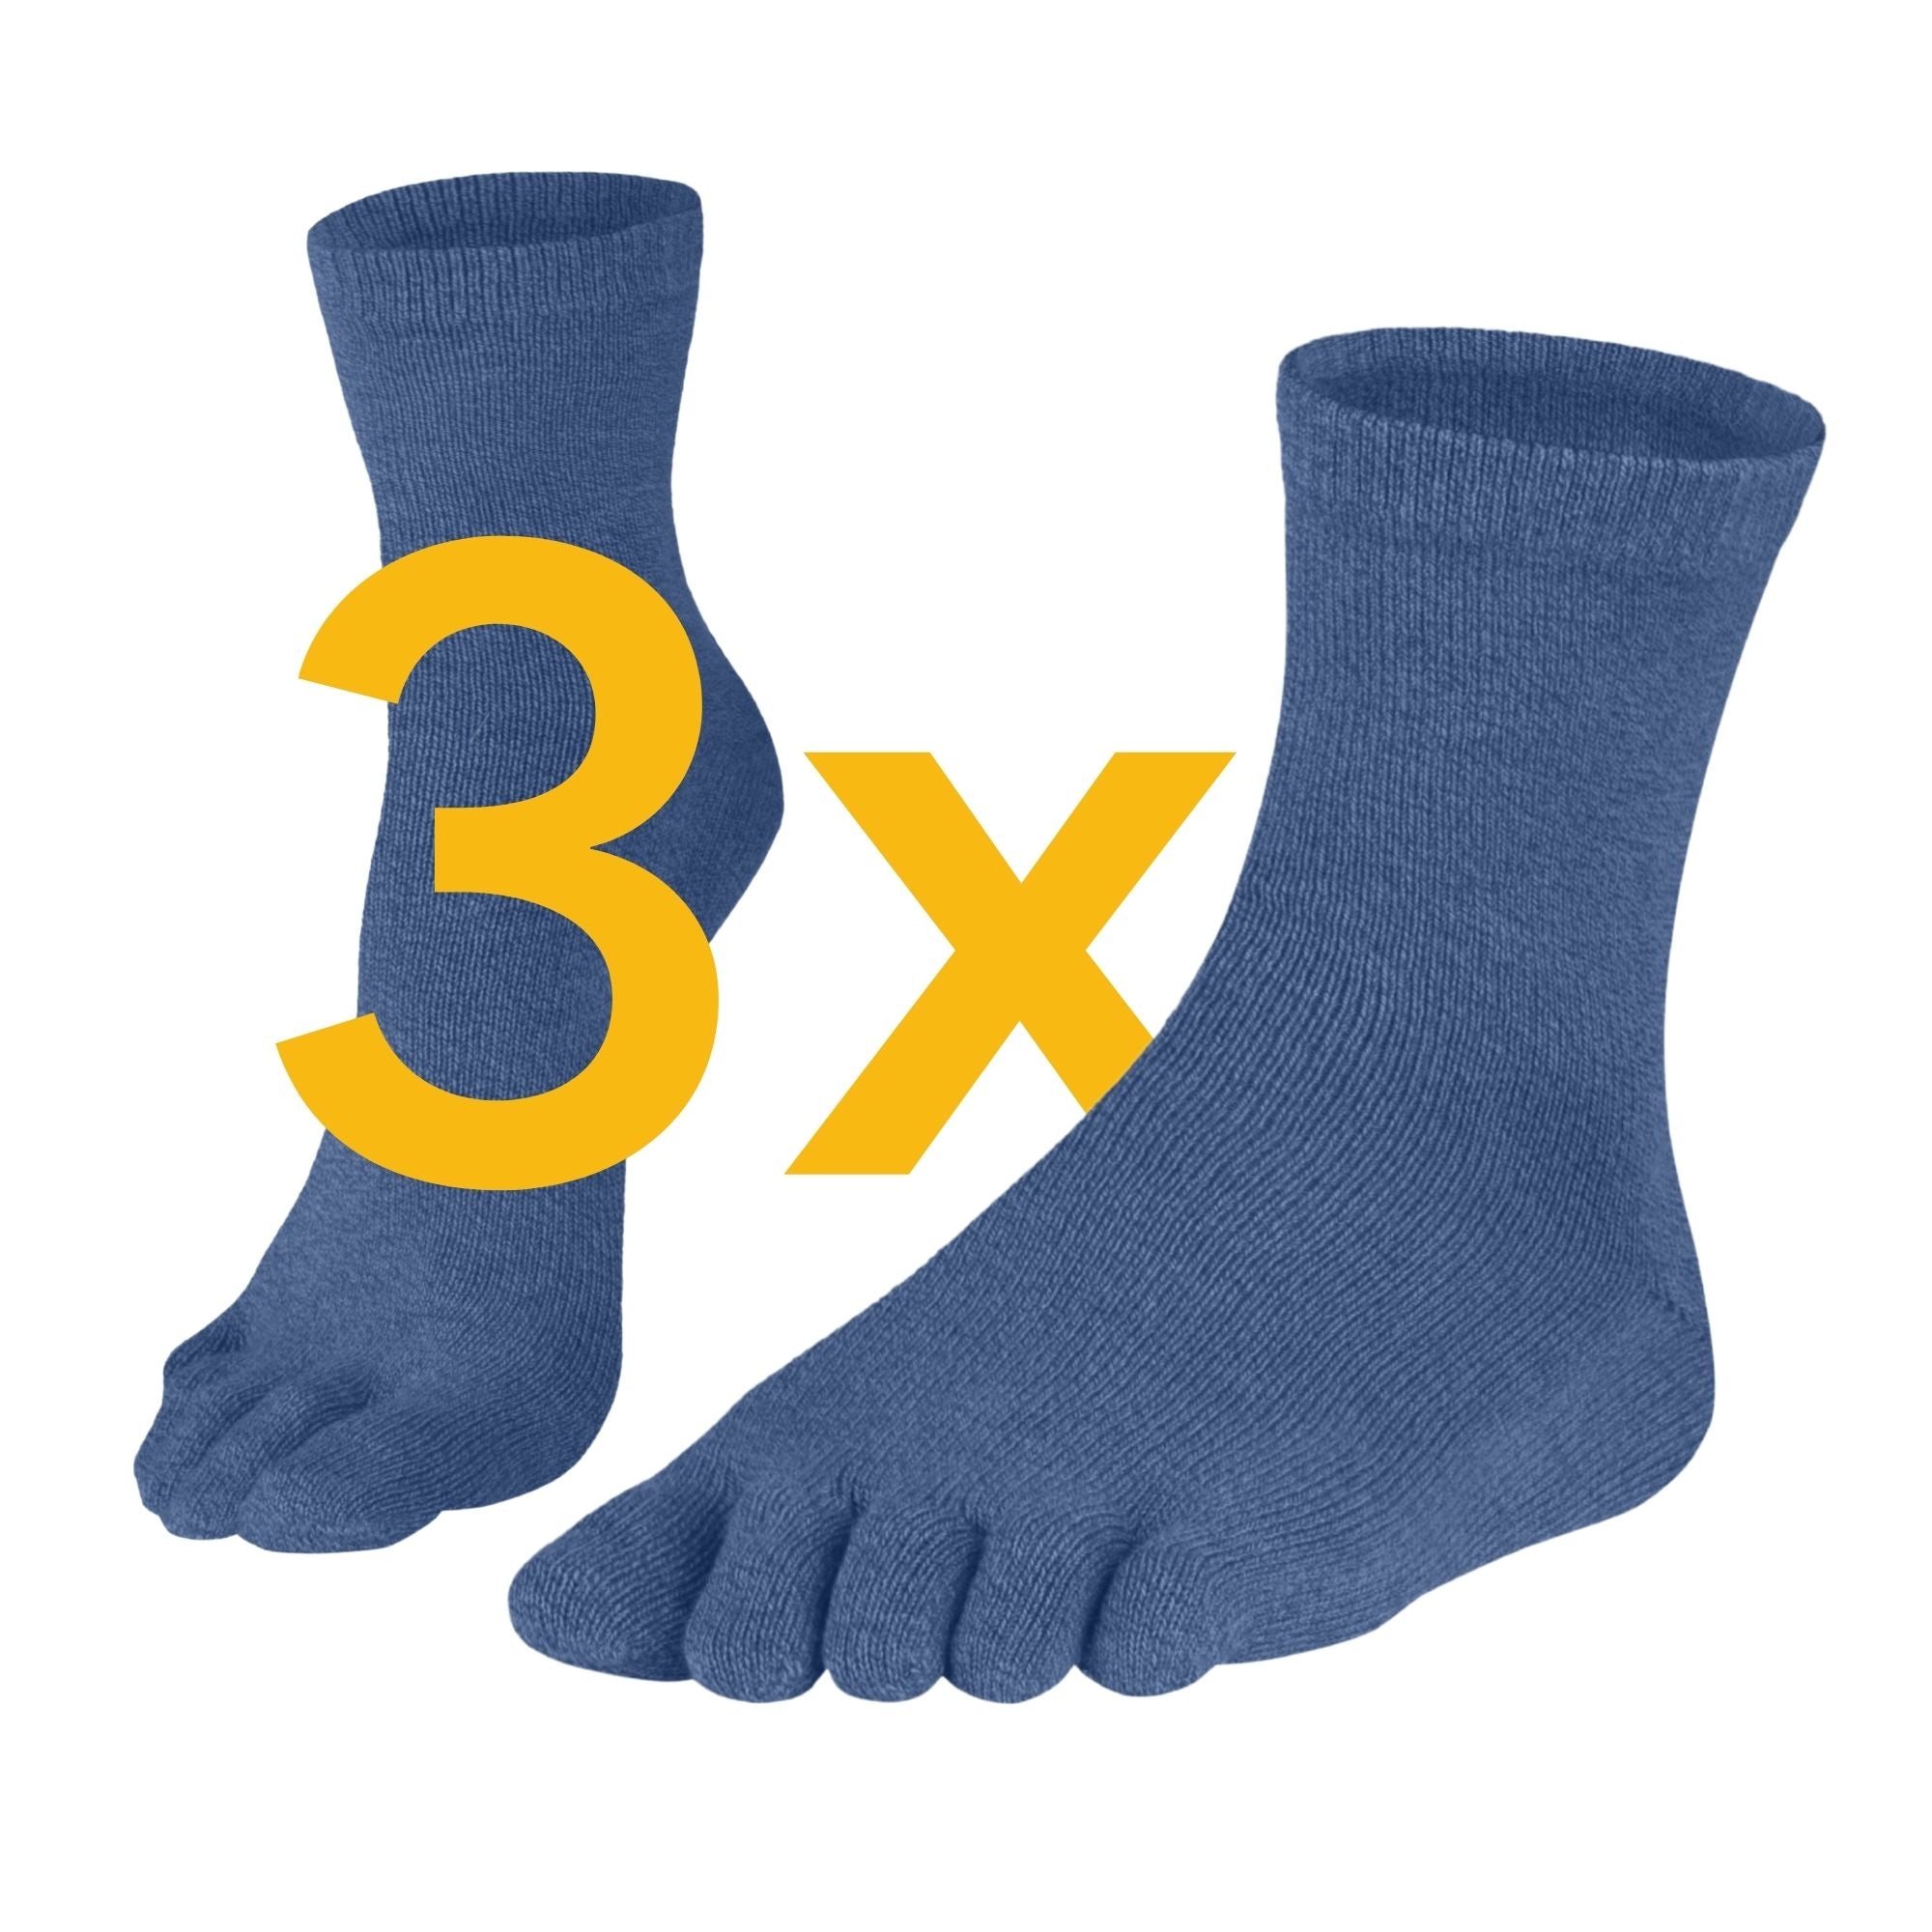 Knitido Essentials midi toe socks from cotton - Knitido®